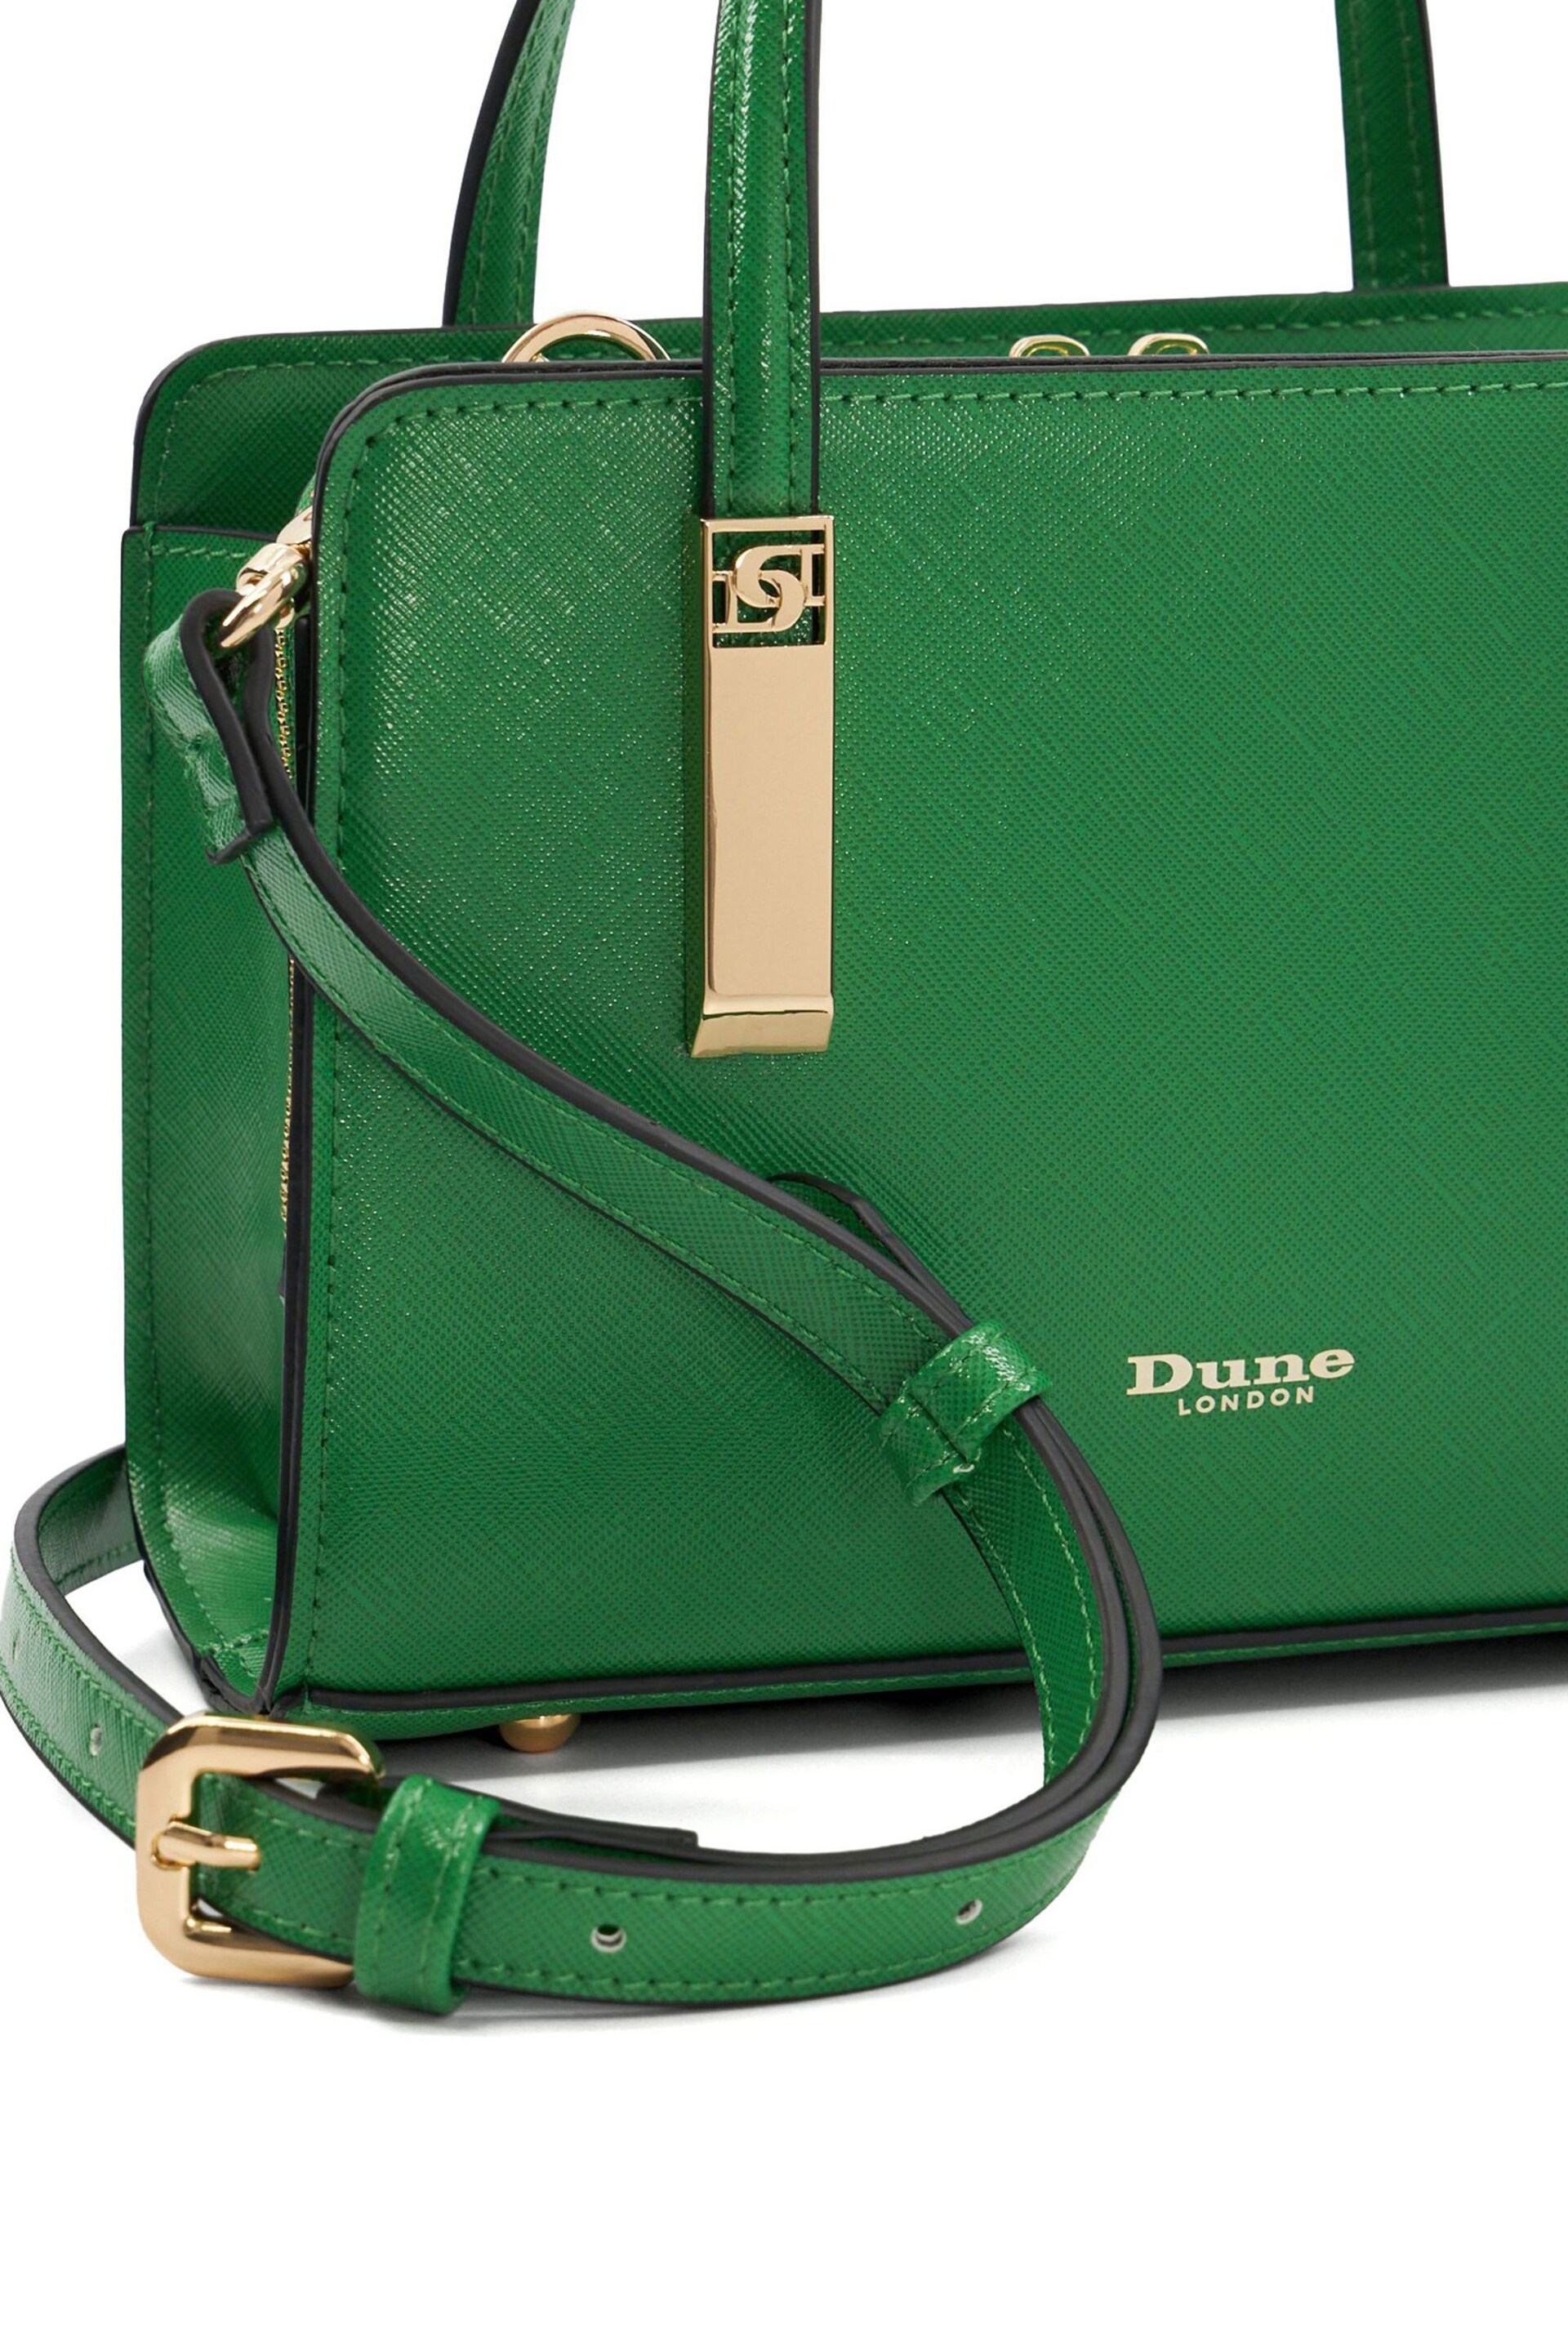 Dune London Green Chrome Dinkydenbeigh Mini Branded Handle Tote Bag - Image 5 of 5